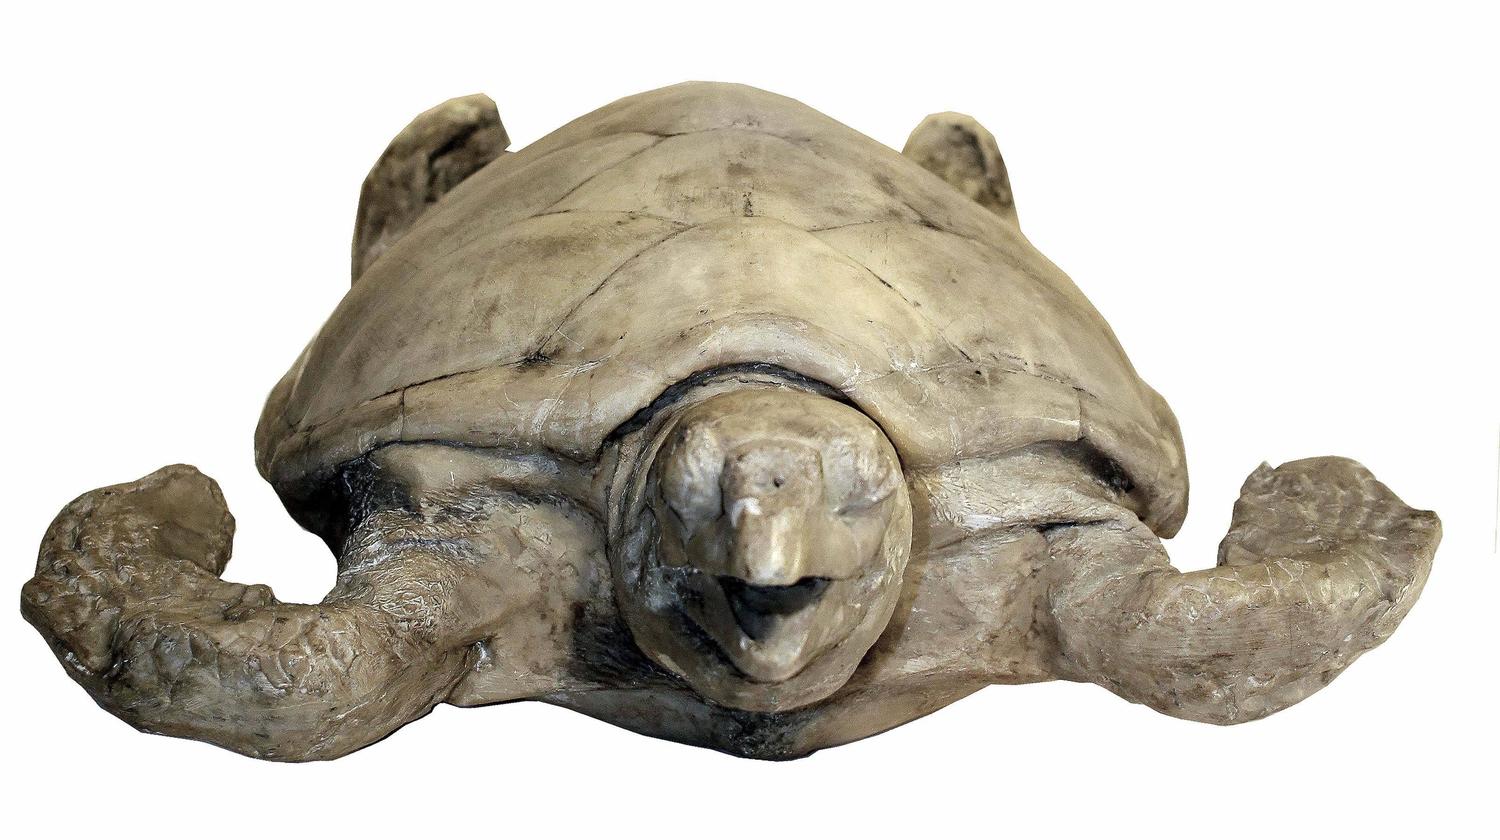 Large Vintage Resin Sea Turtle For Sale at 1stdibs